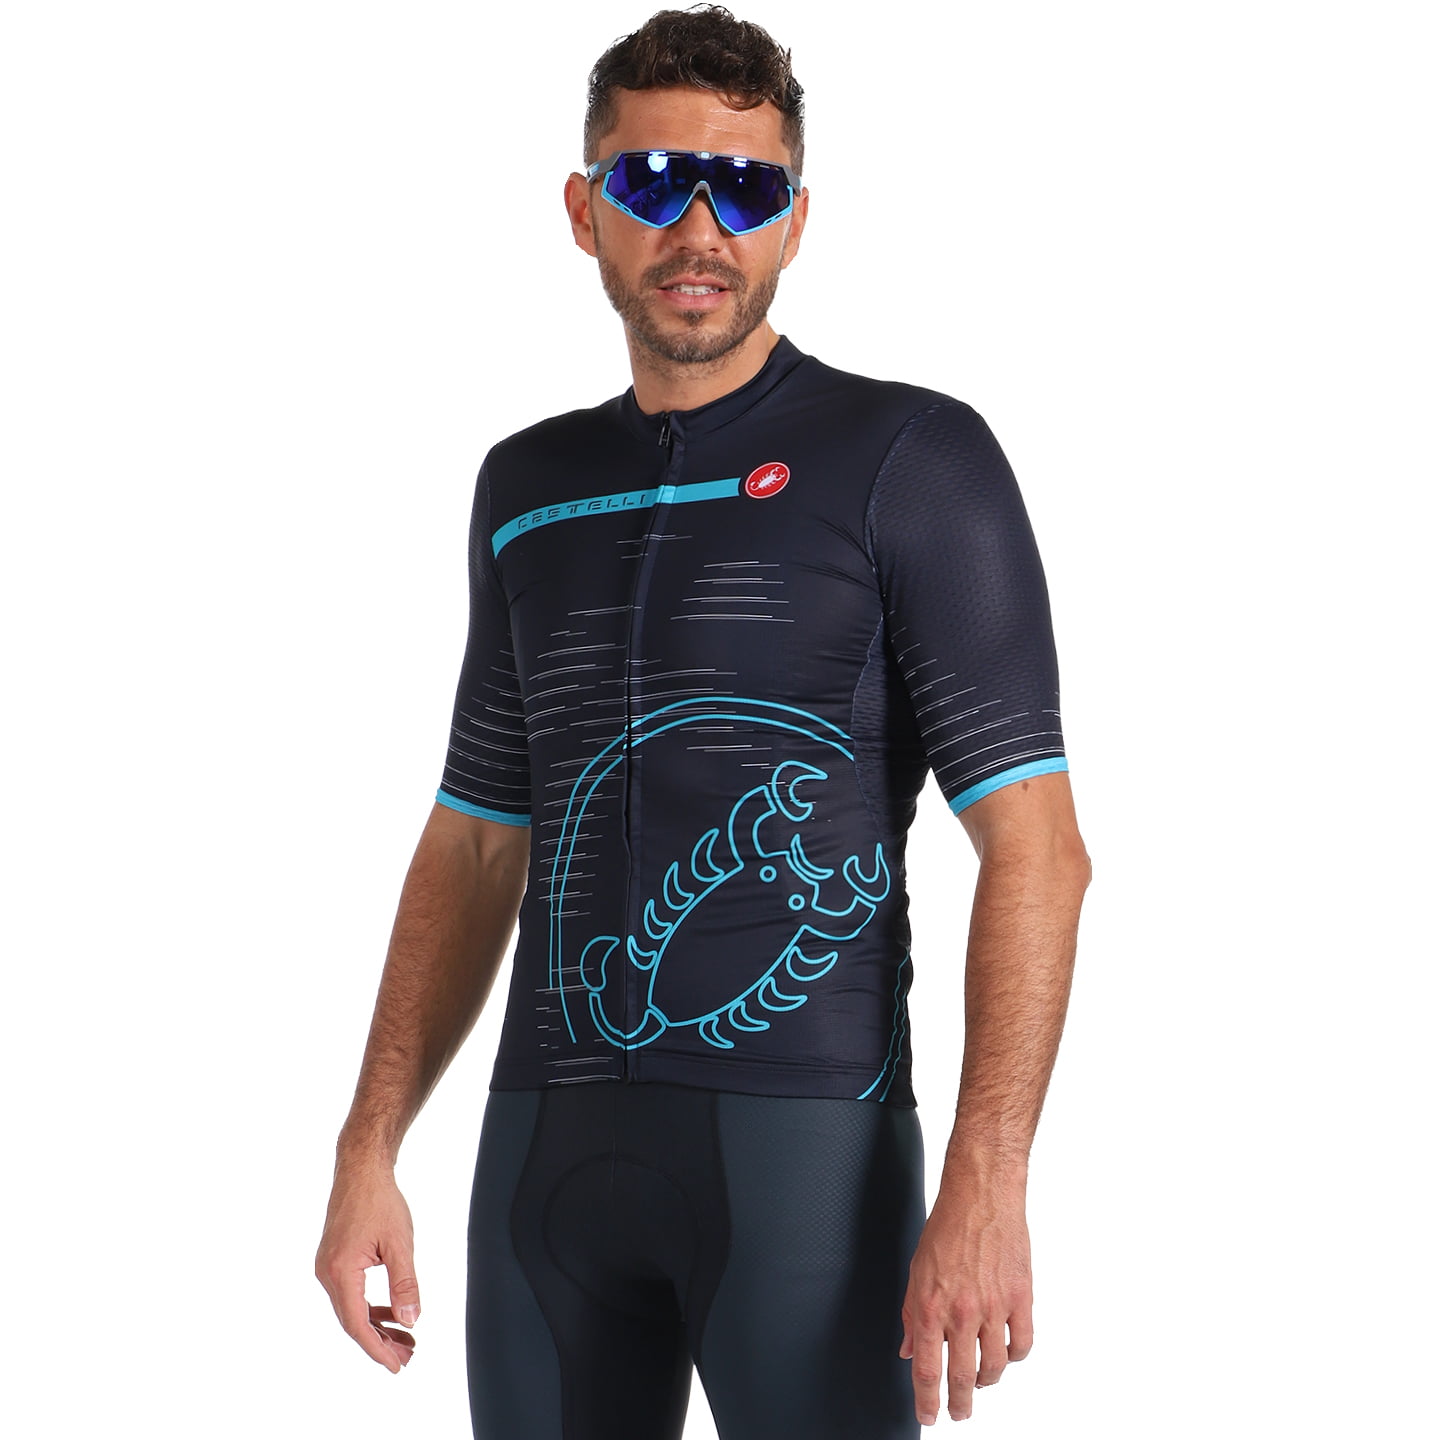 CASTELLI Scorpione Short Sleeve Jersey Short Sleeve Jersey, for men, size L, Cycling jersey, Cycling clothing